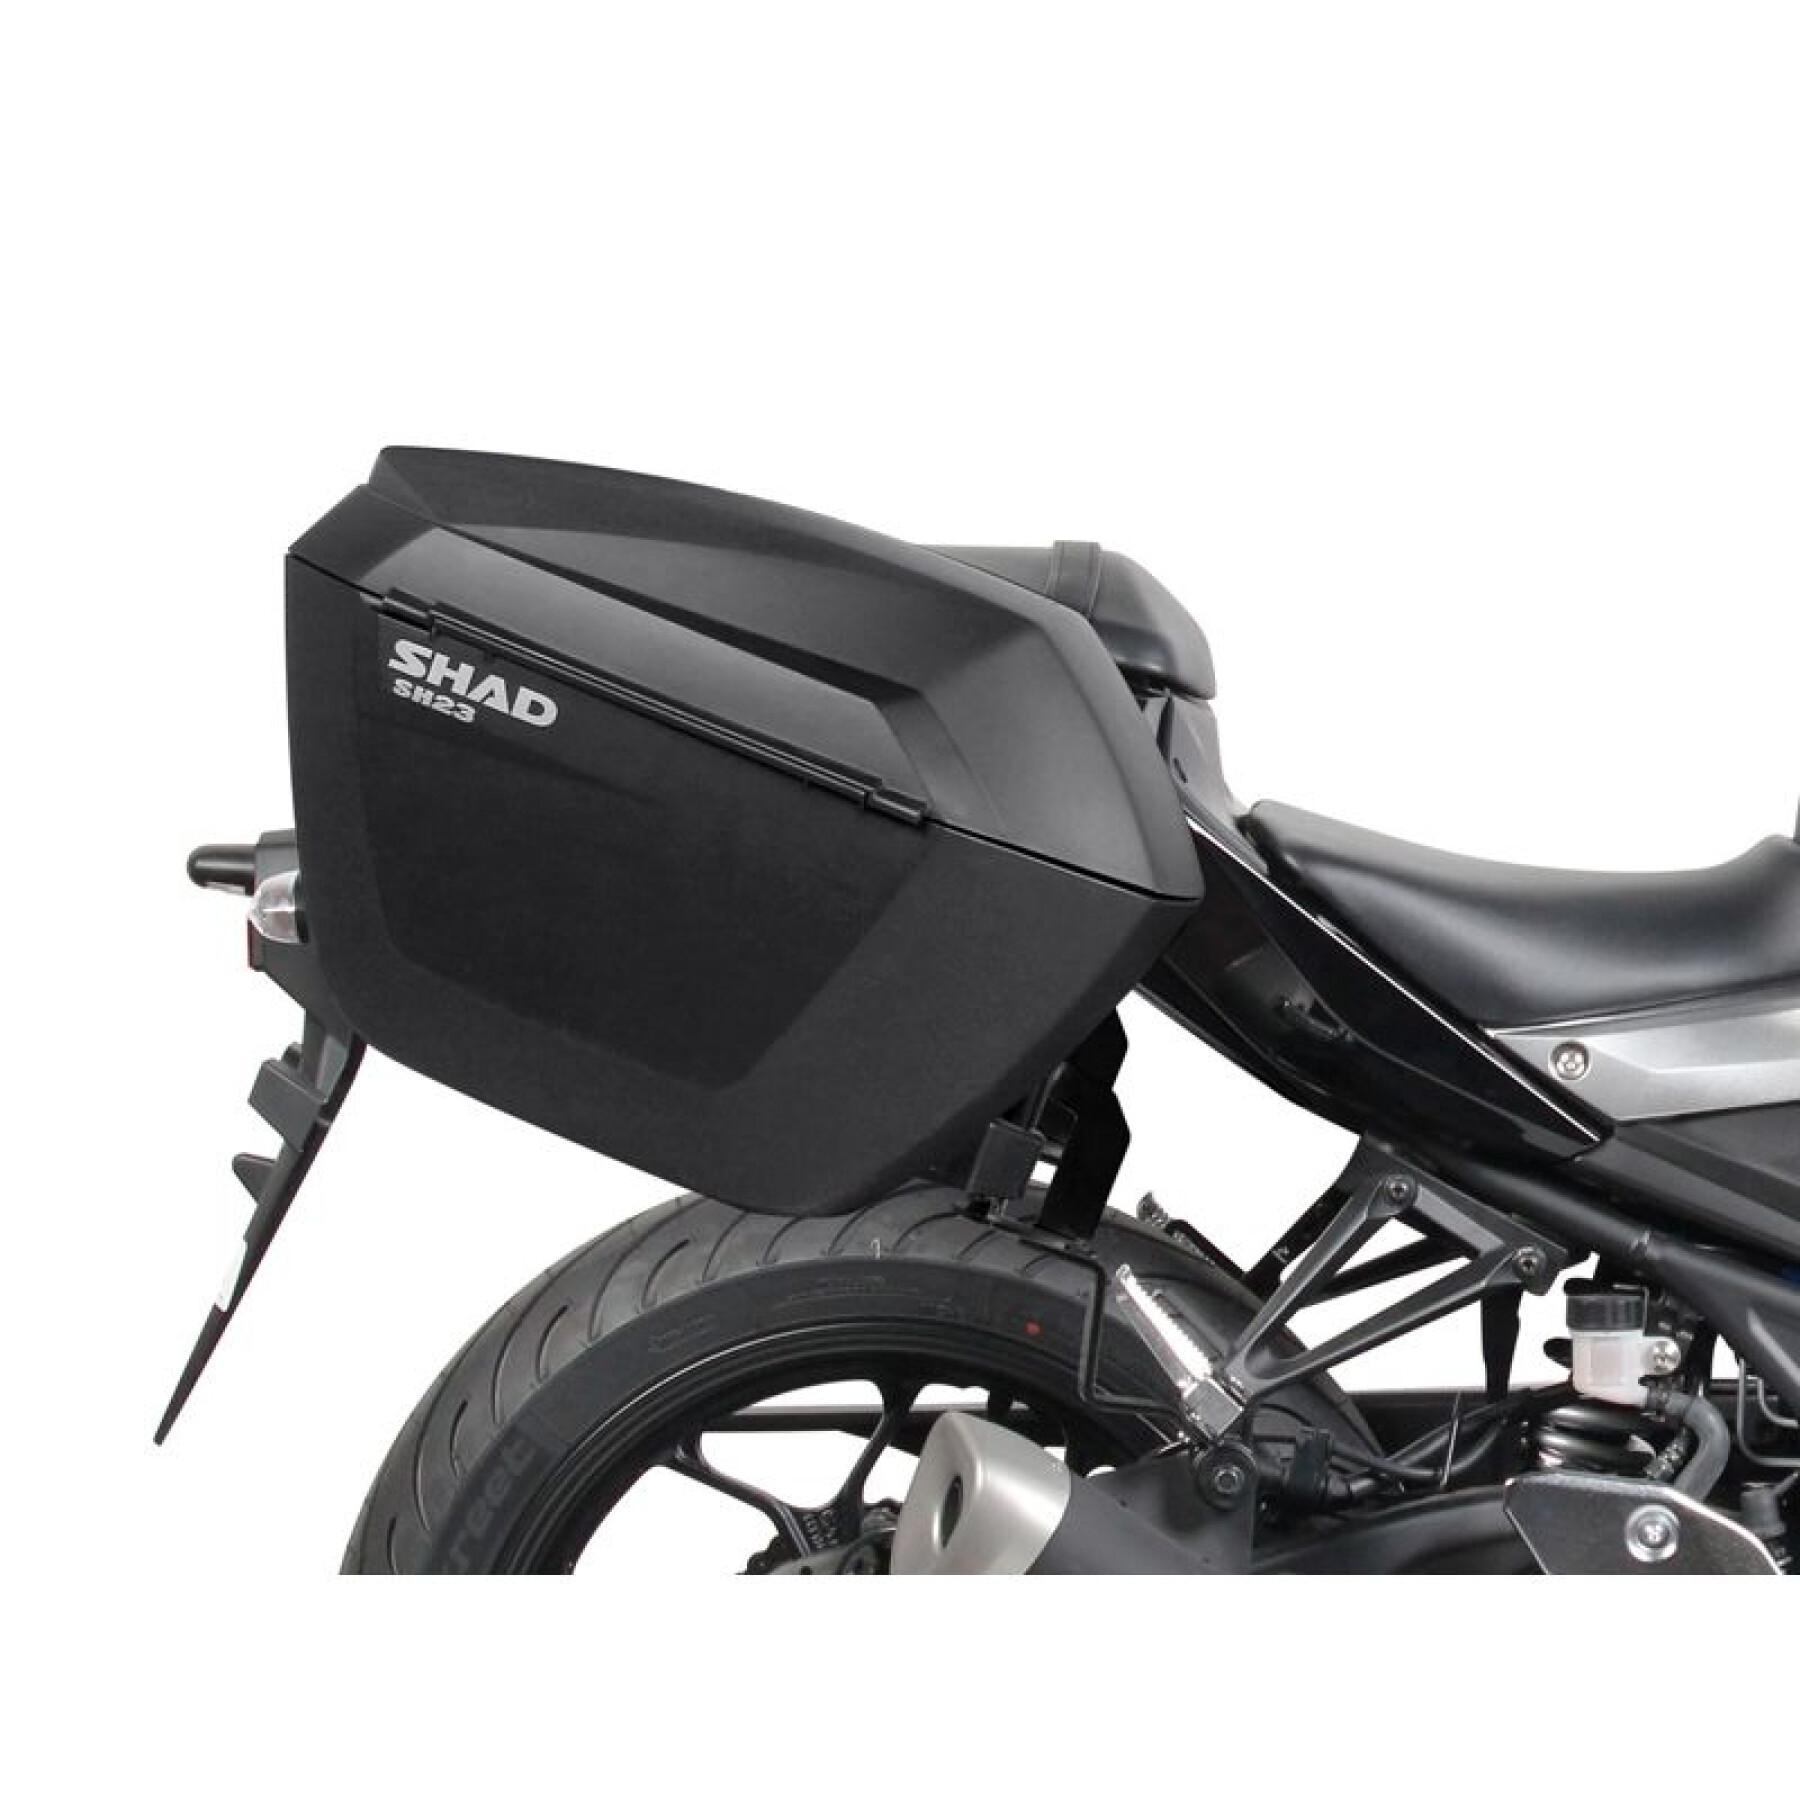 Support valises latérales moto Shad 3P System Yamaha Mt03 (15 À 19)